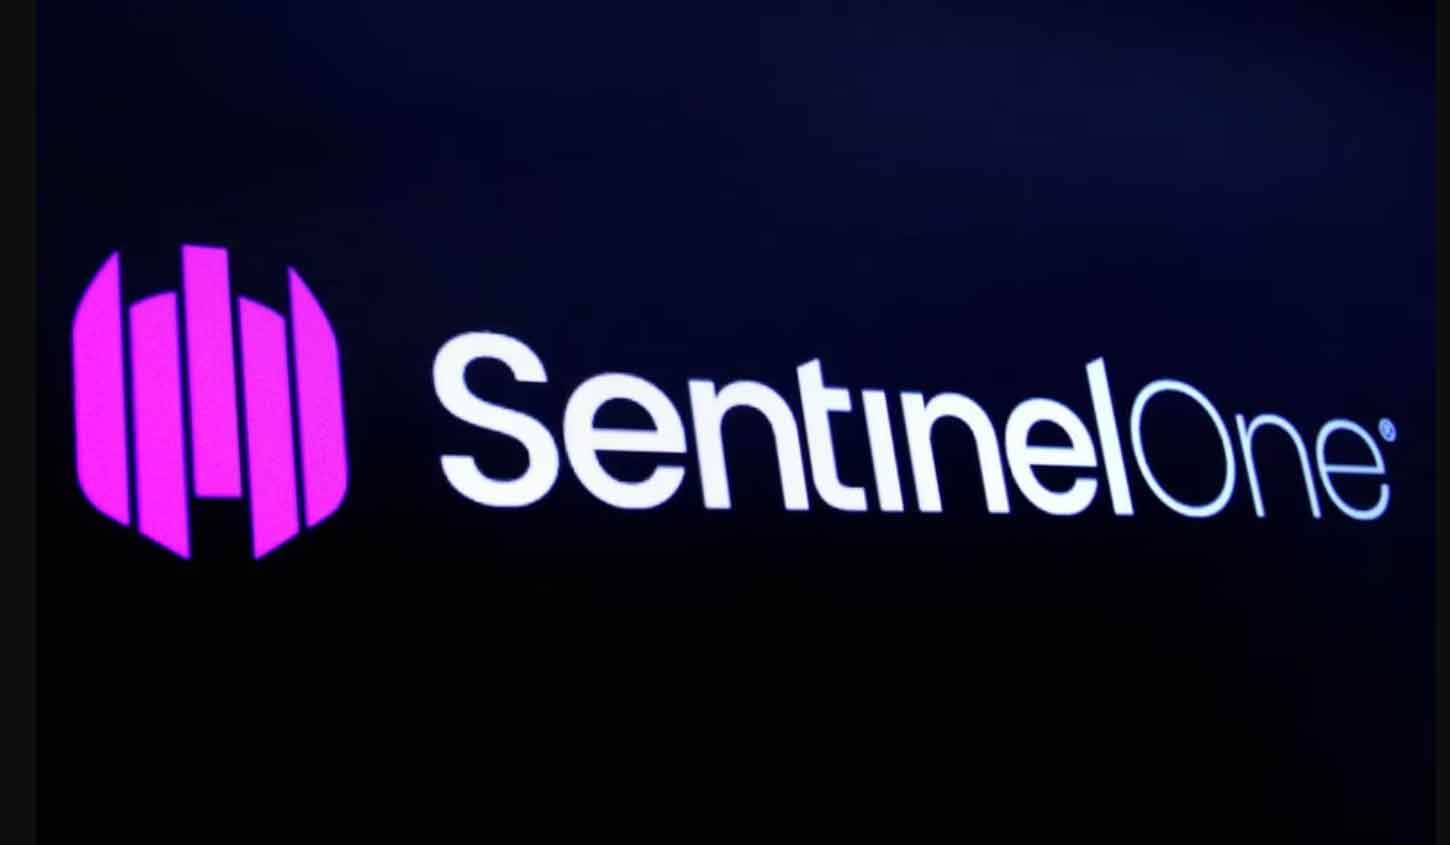 SentinelOne raises full-year forecast, adds partnership with Wiz still on